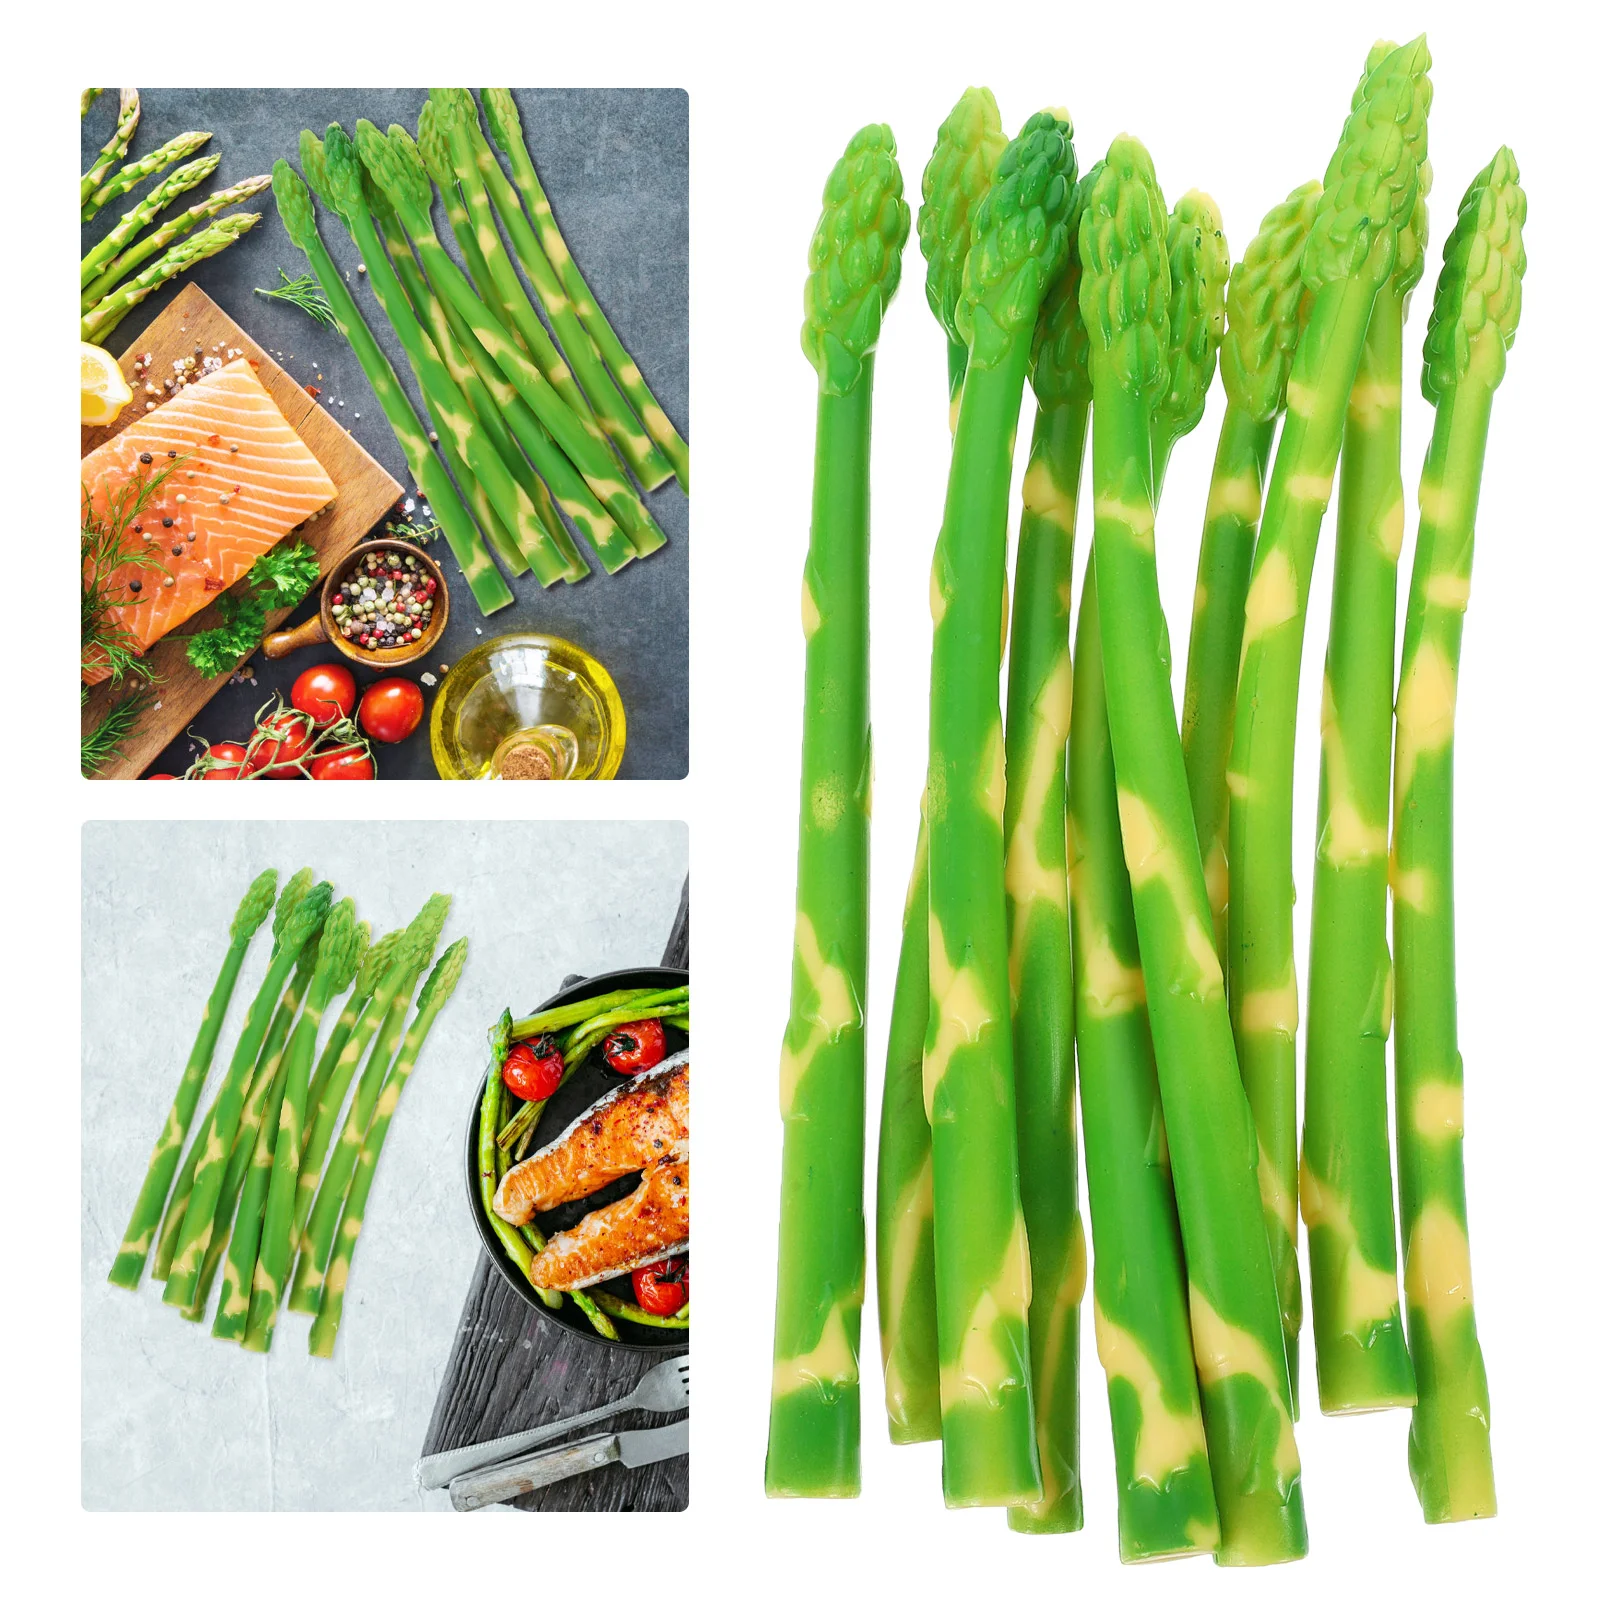 

10 Pcs Simulated Asparagus Ornaments Simulation Decors Rustic Realistic Vegetable Restaurant Display Vegetables Home Models